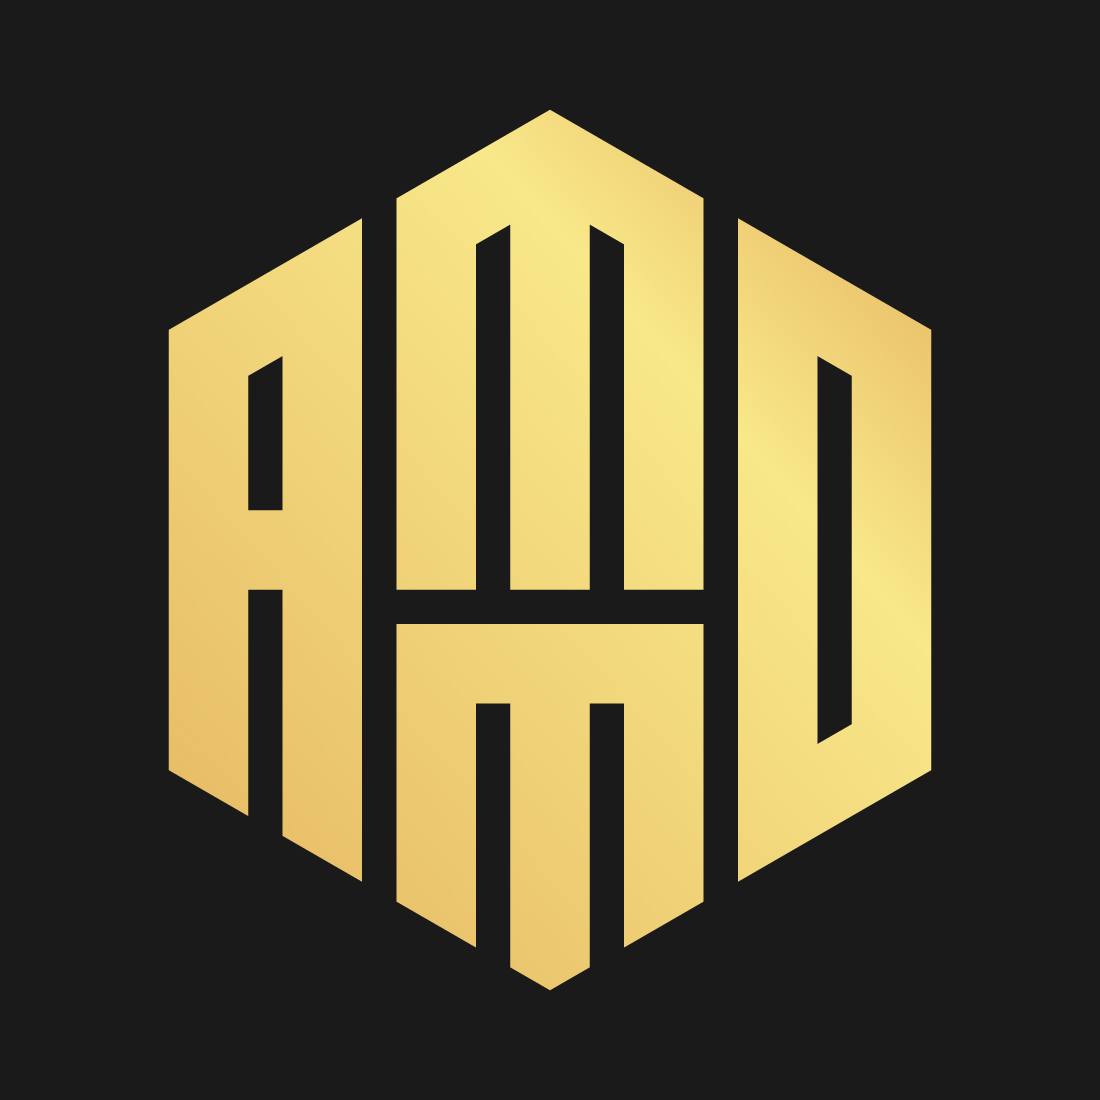 AMMO logo design preview image.